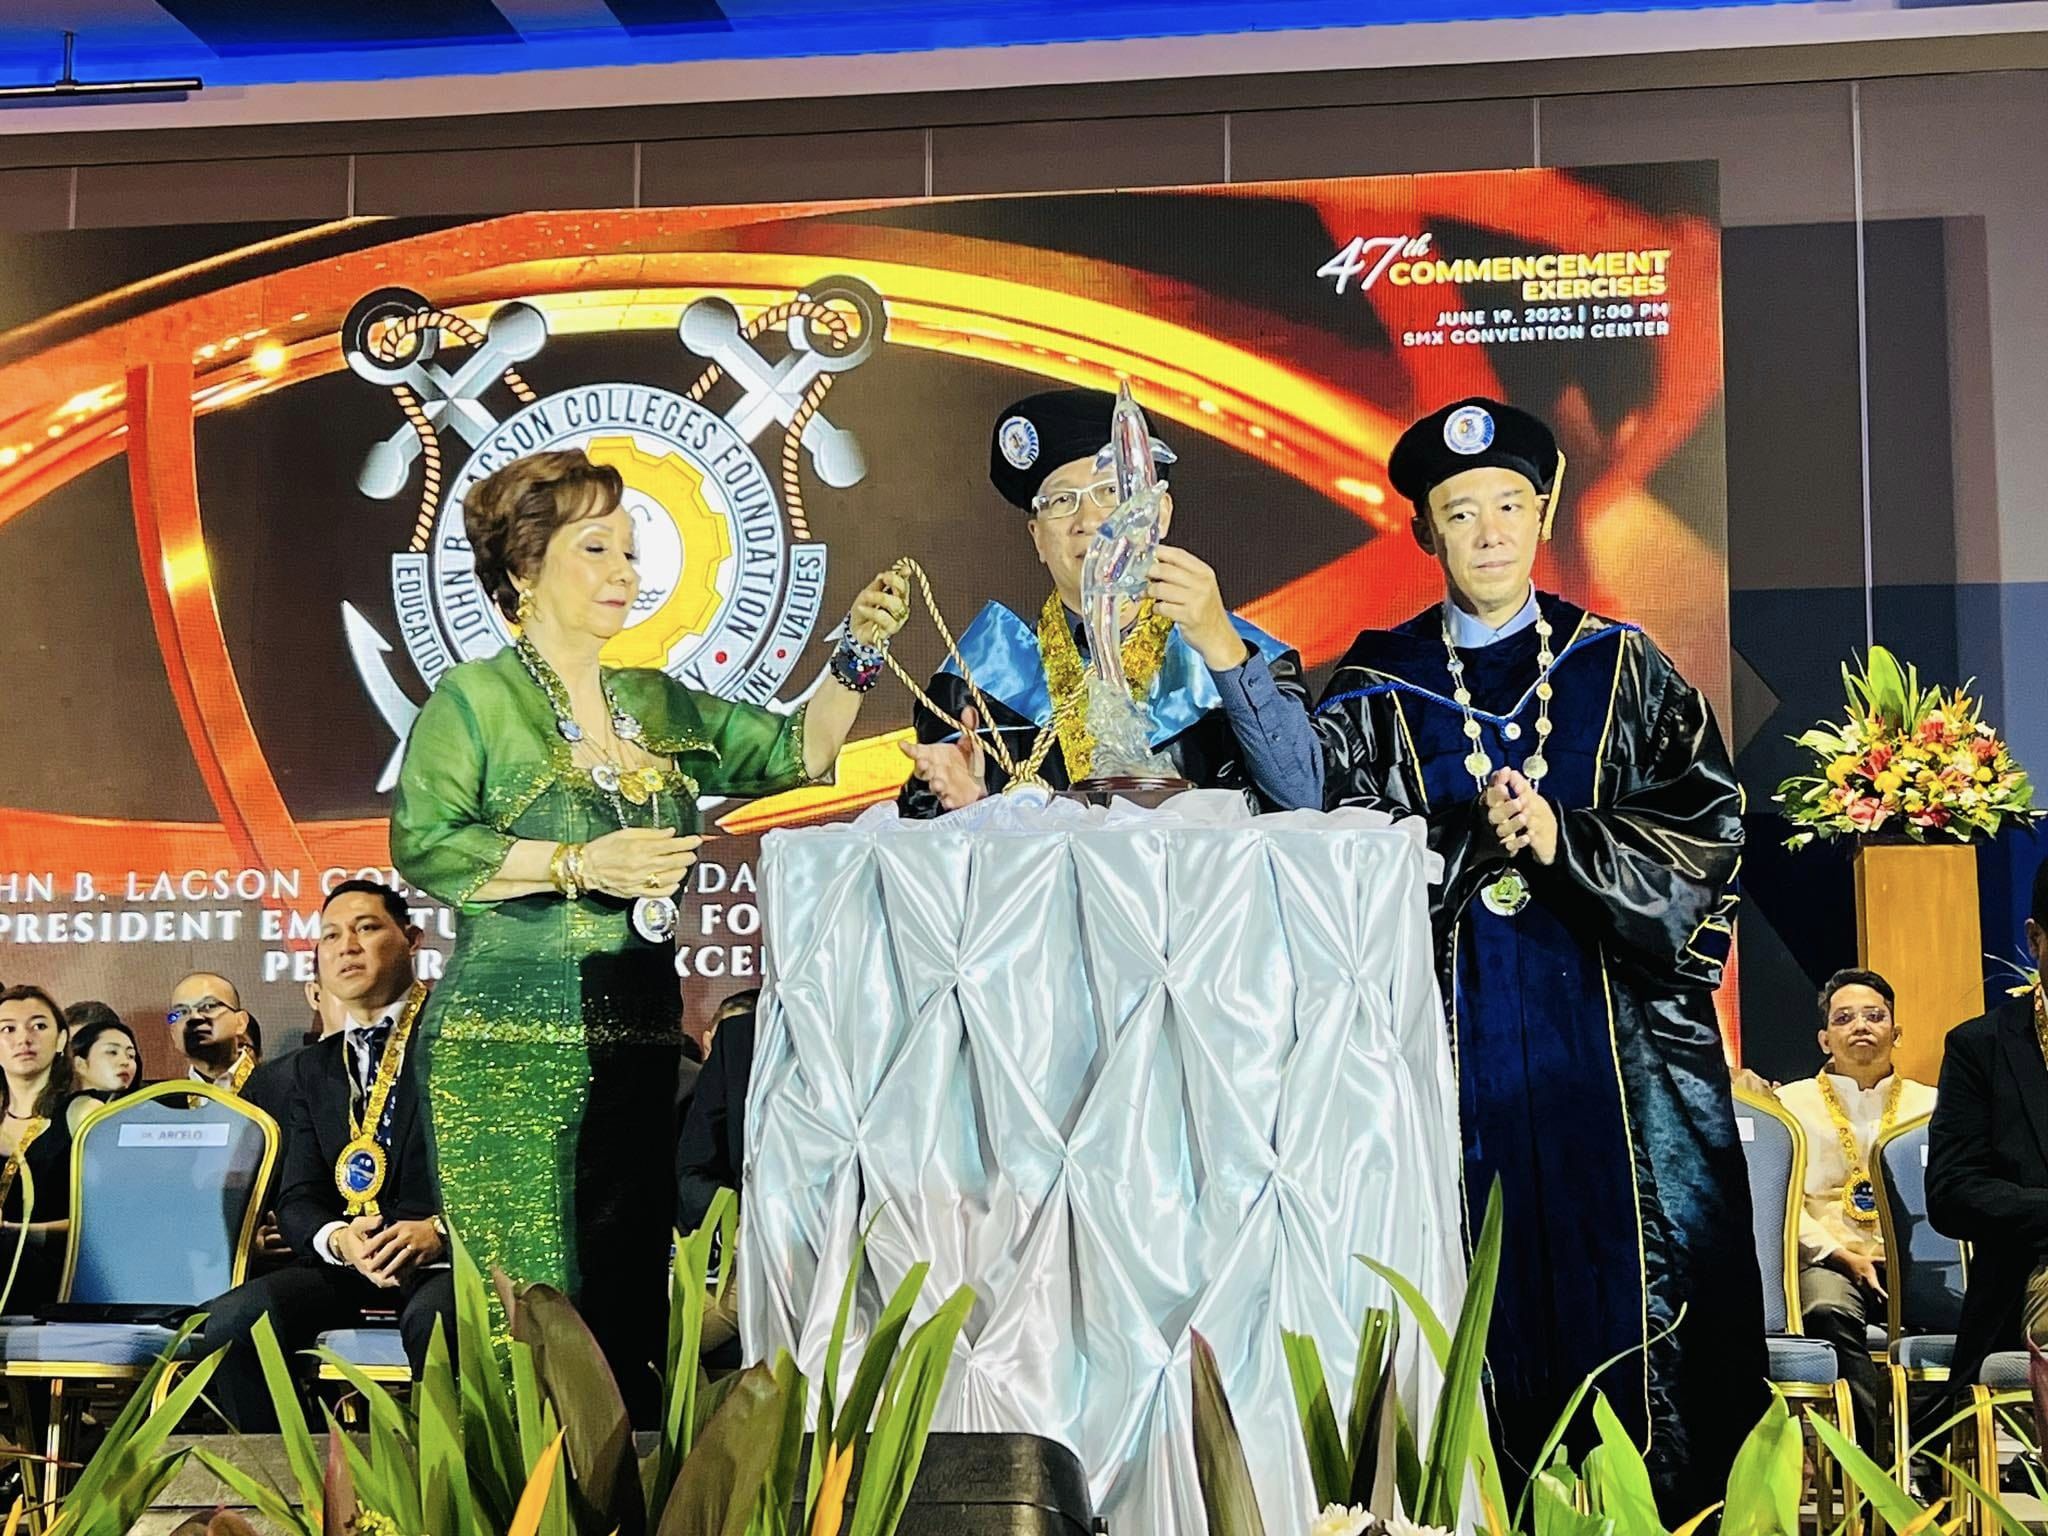 JBLCF- Bacolod wins this year's President Emeritus Award